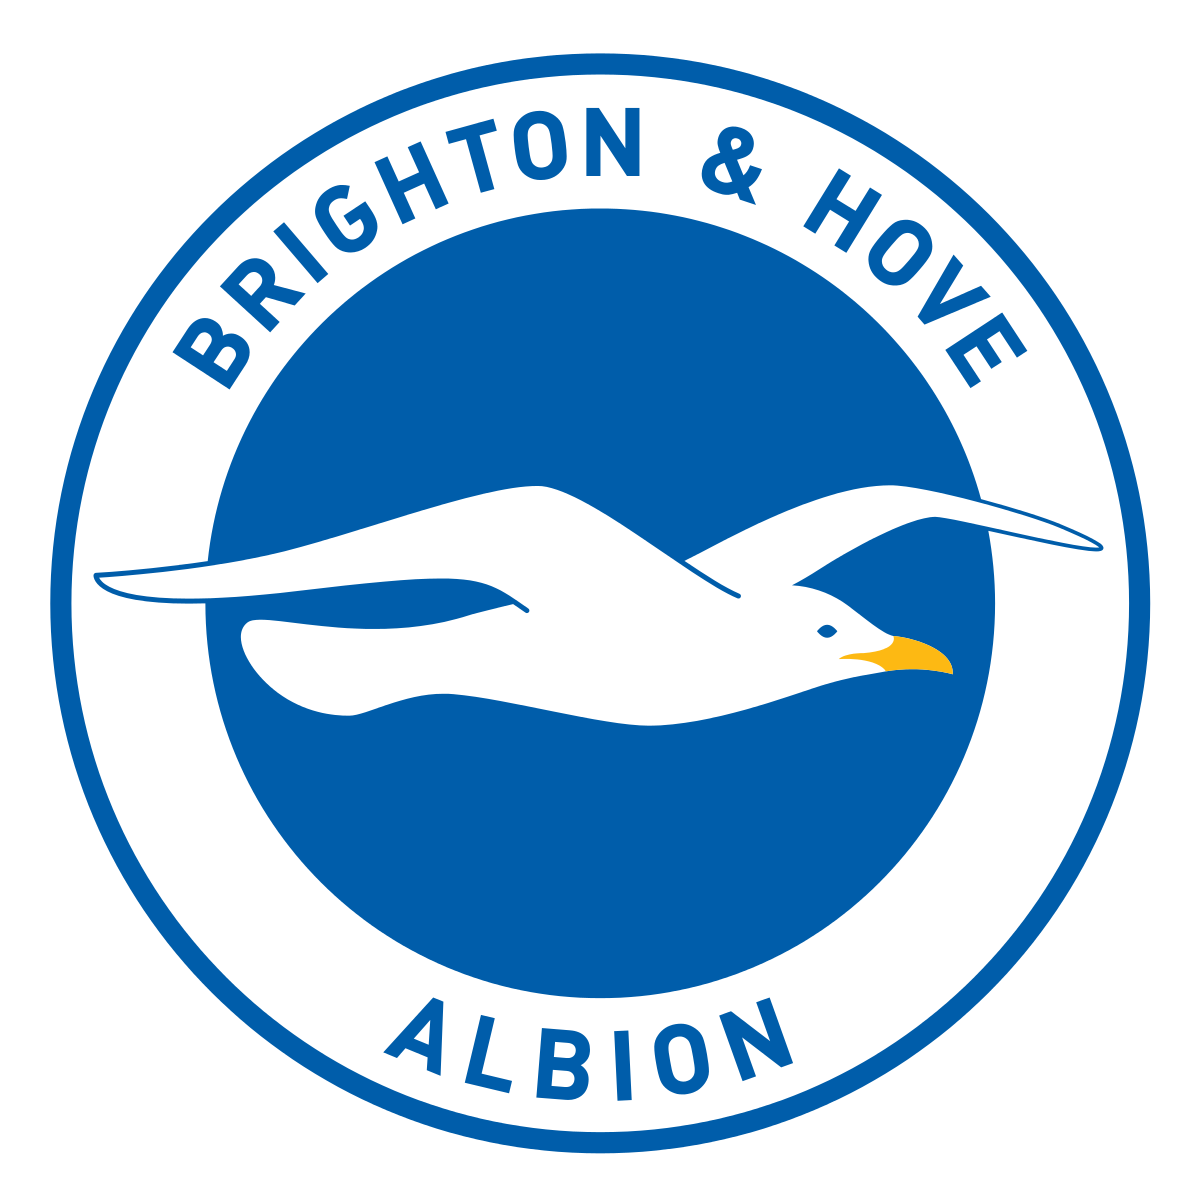 Brighton (u21) team logo